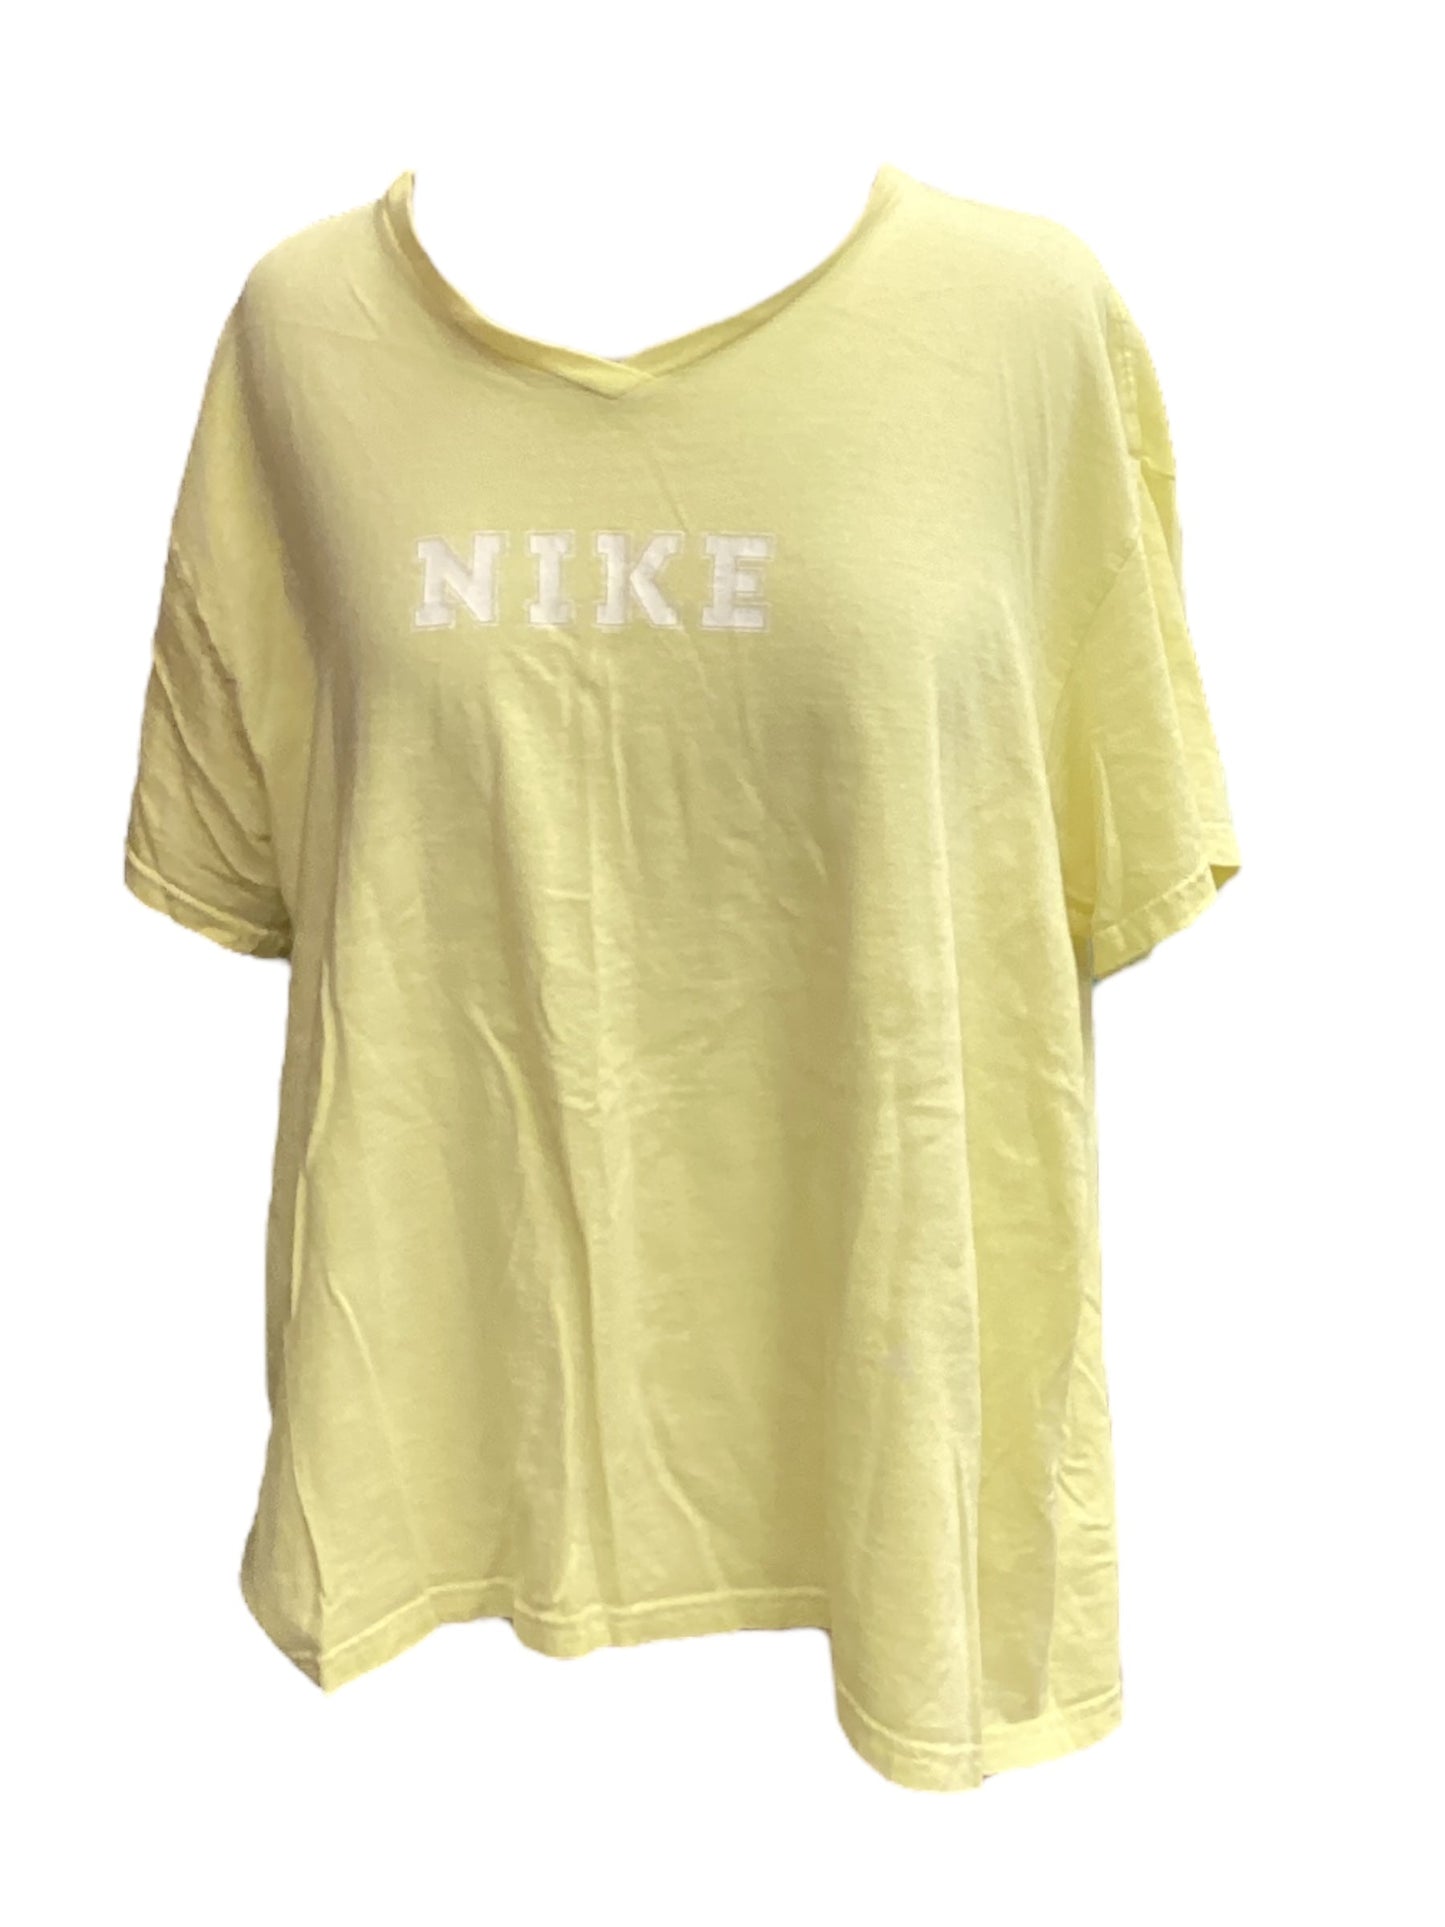 Yellow Top Short Sleeve Nike, Size Xl